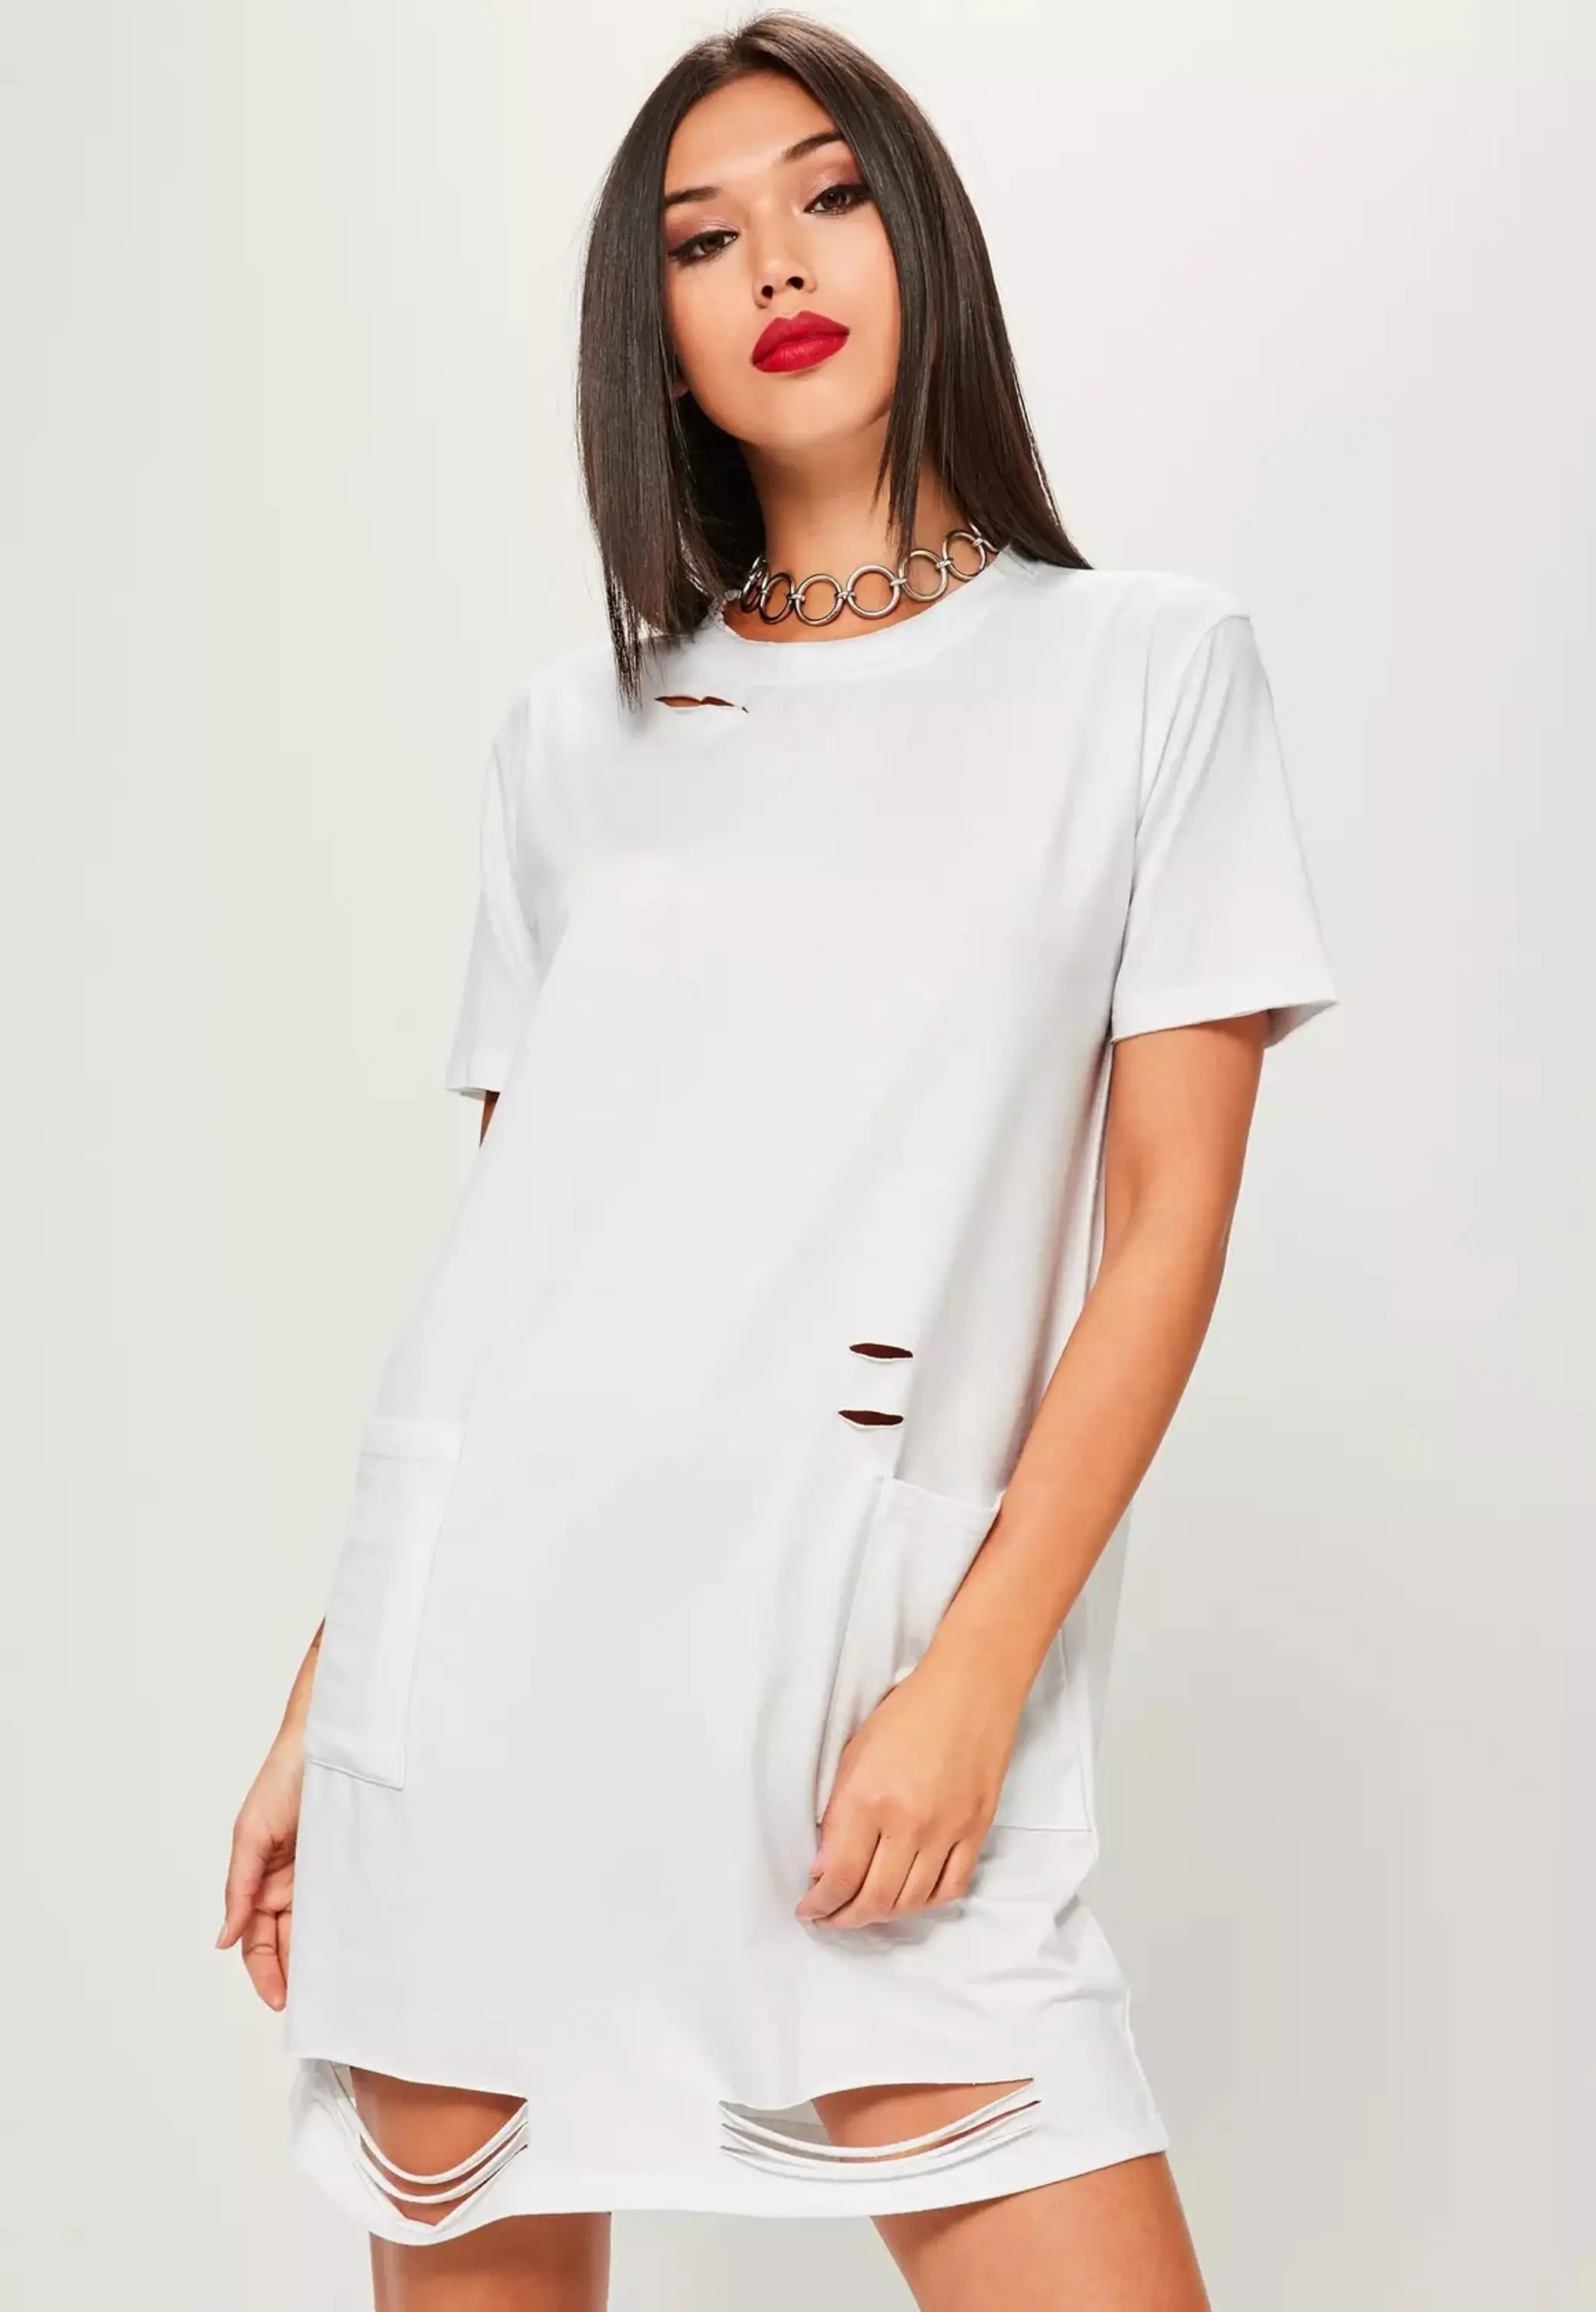 Download 100 Cotton Fabric For T-shirt Clothing Women Plain White ...